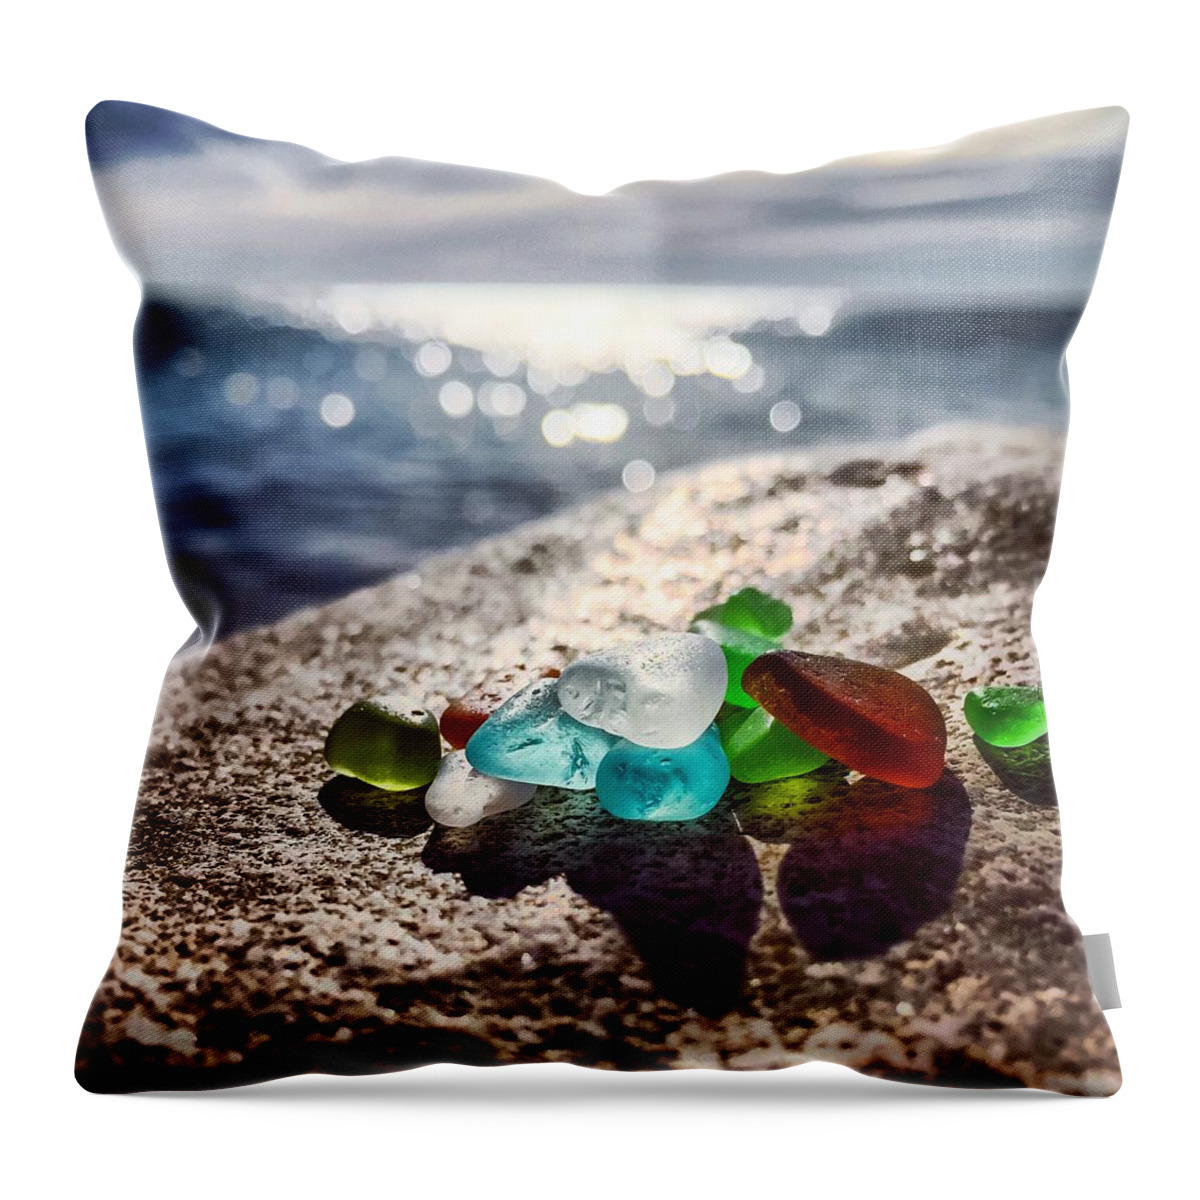 Water Throw Pillow featuring the photograph Shoreshine by Terri Hart-Ellis